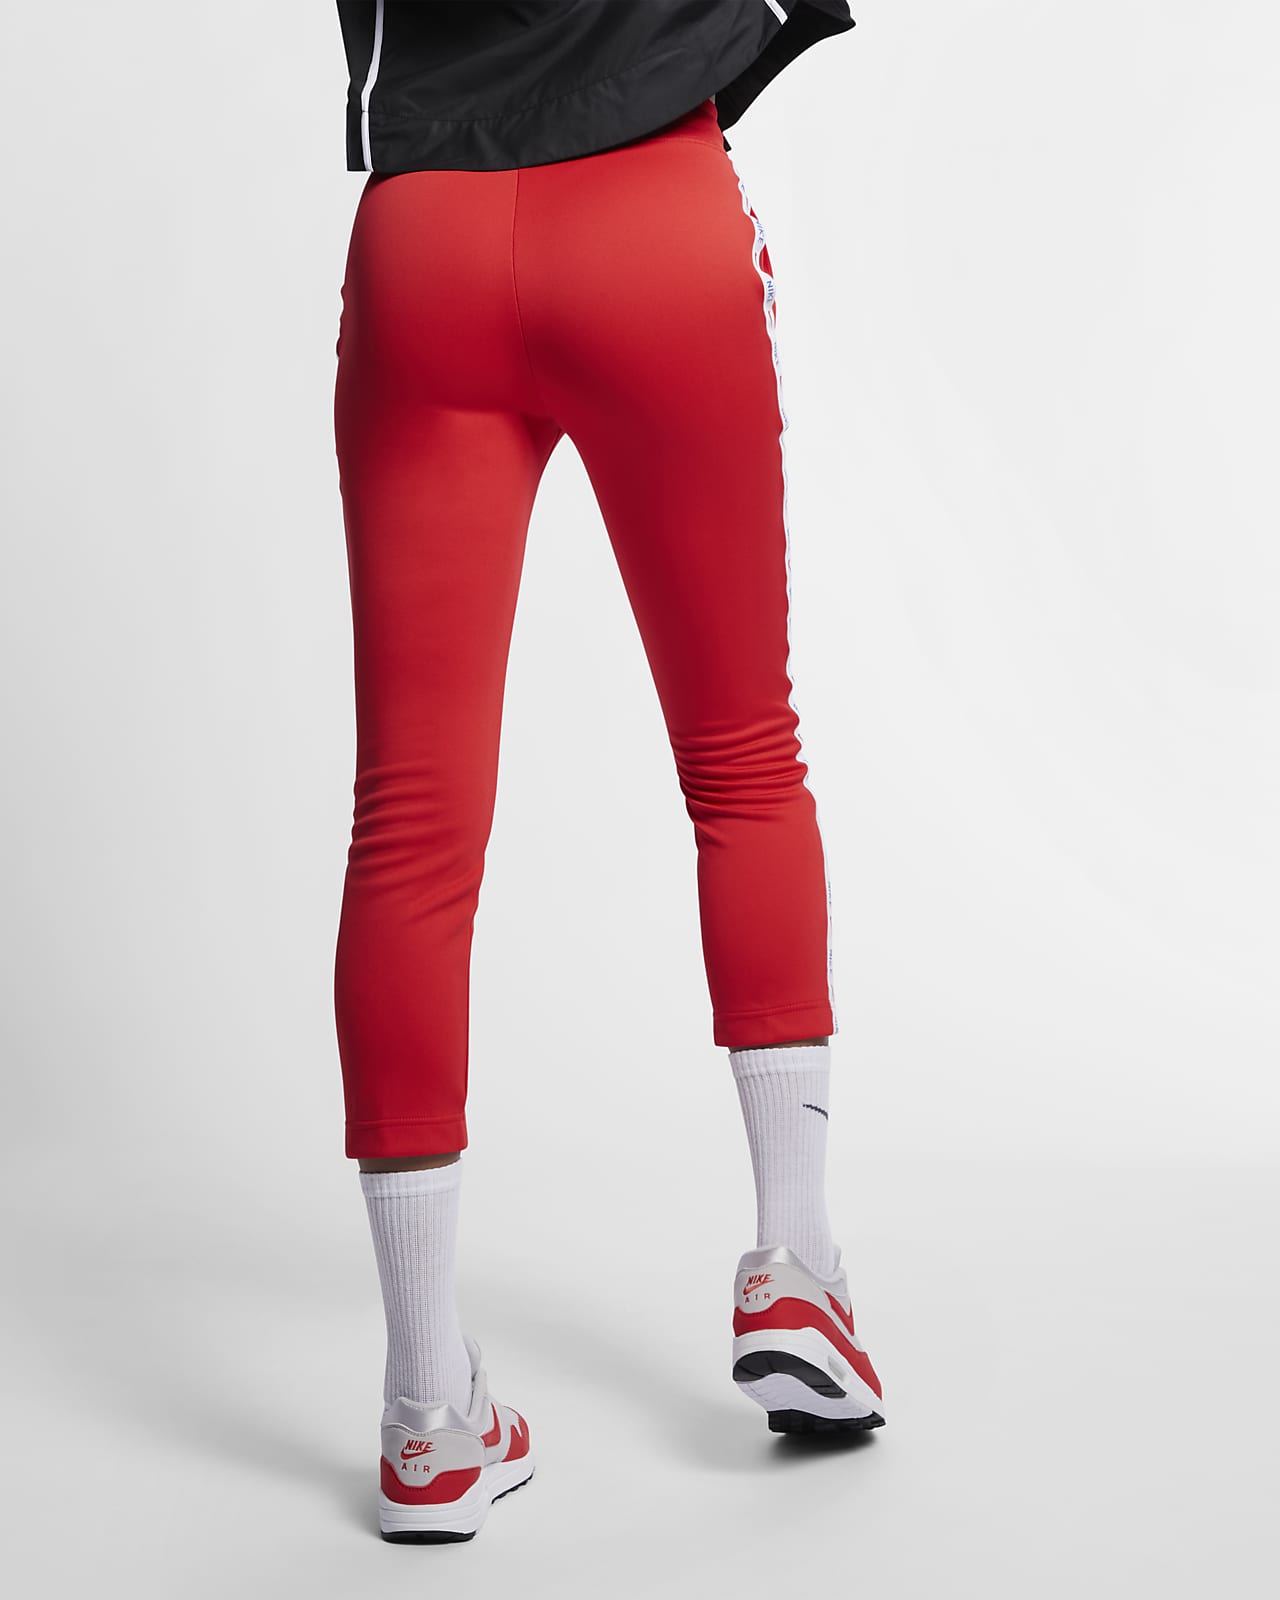 Nike Womens Track Pants Trousers Training GYM Dance Gray Neon